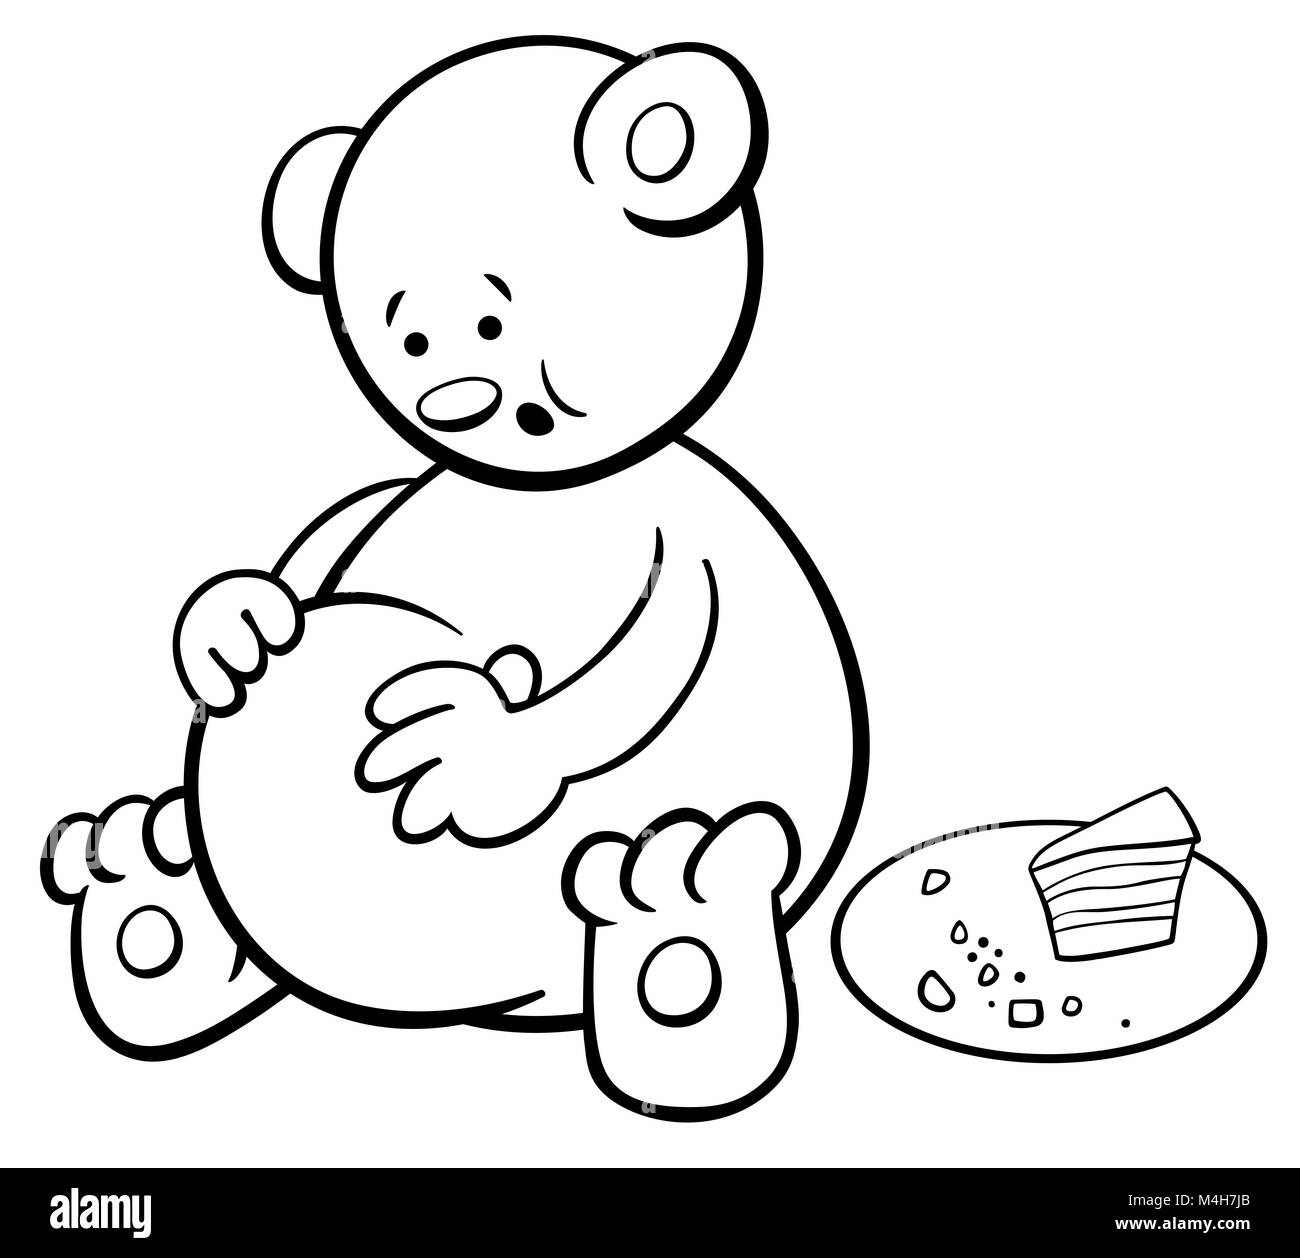 bear cartoon coloring book Stock Photo